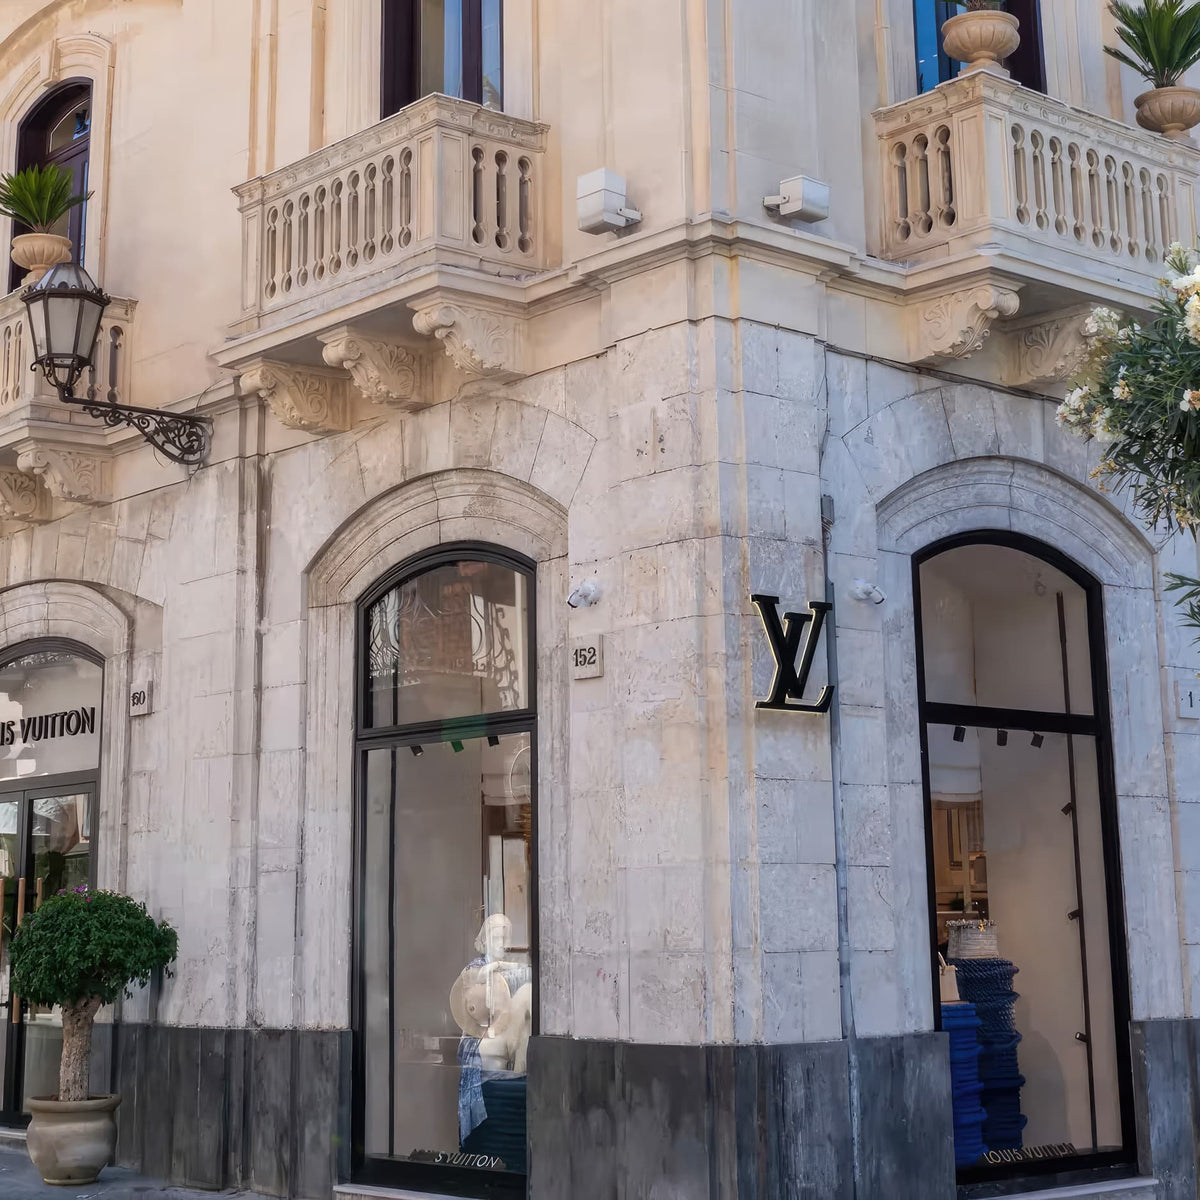 Louis Vuitton Café by Timeo in Taormina, Sicily